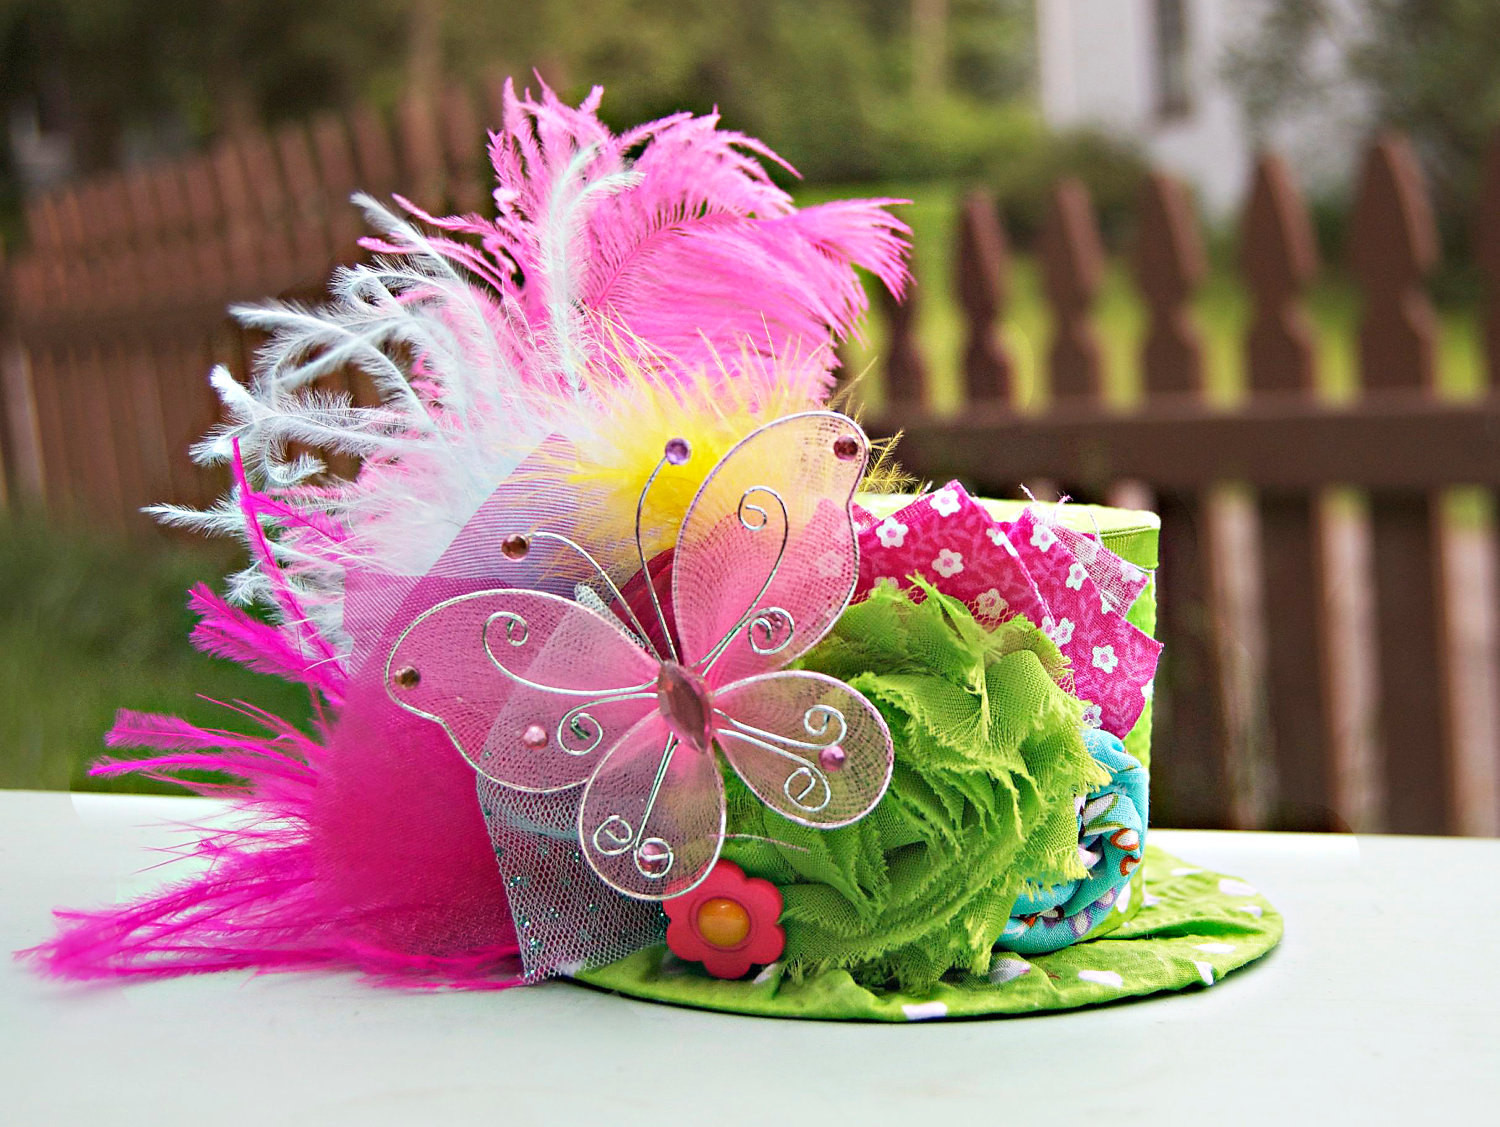 Mad Hatter Tea Party Hats Ideas
 Mini Top Hat Alice in Wonderland Prop Birthday Top